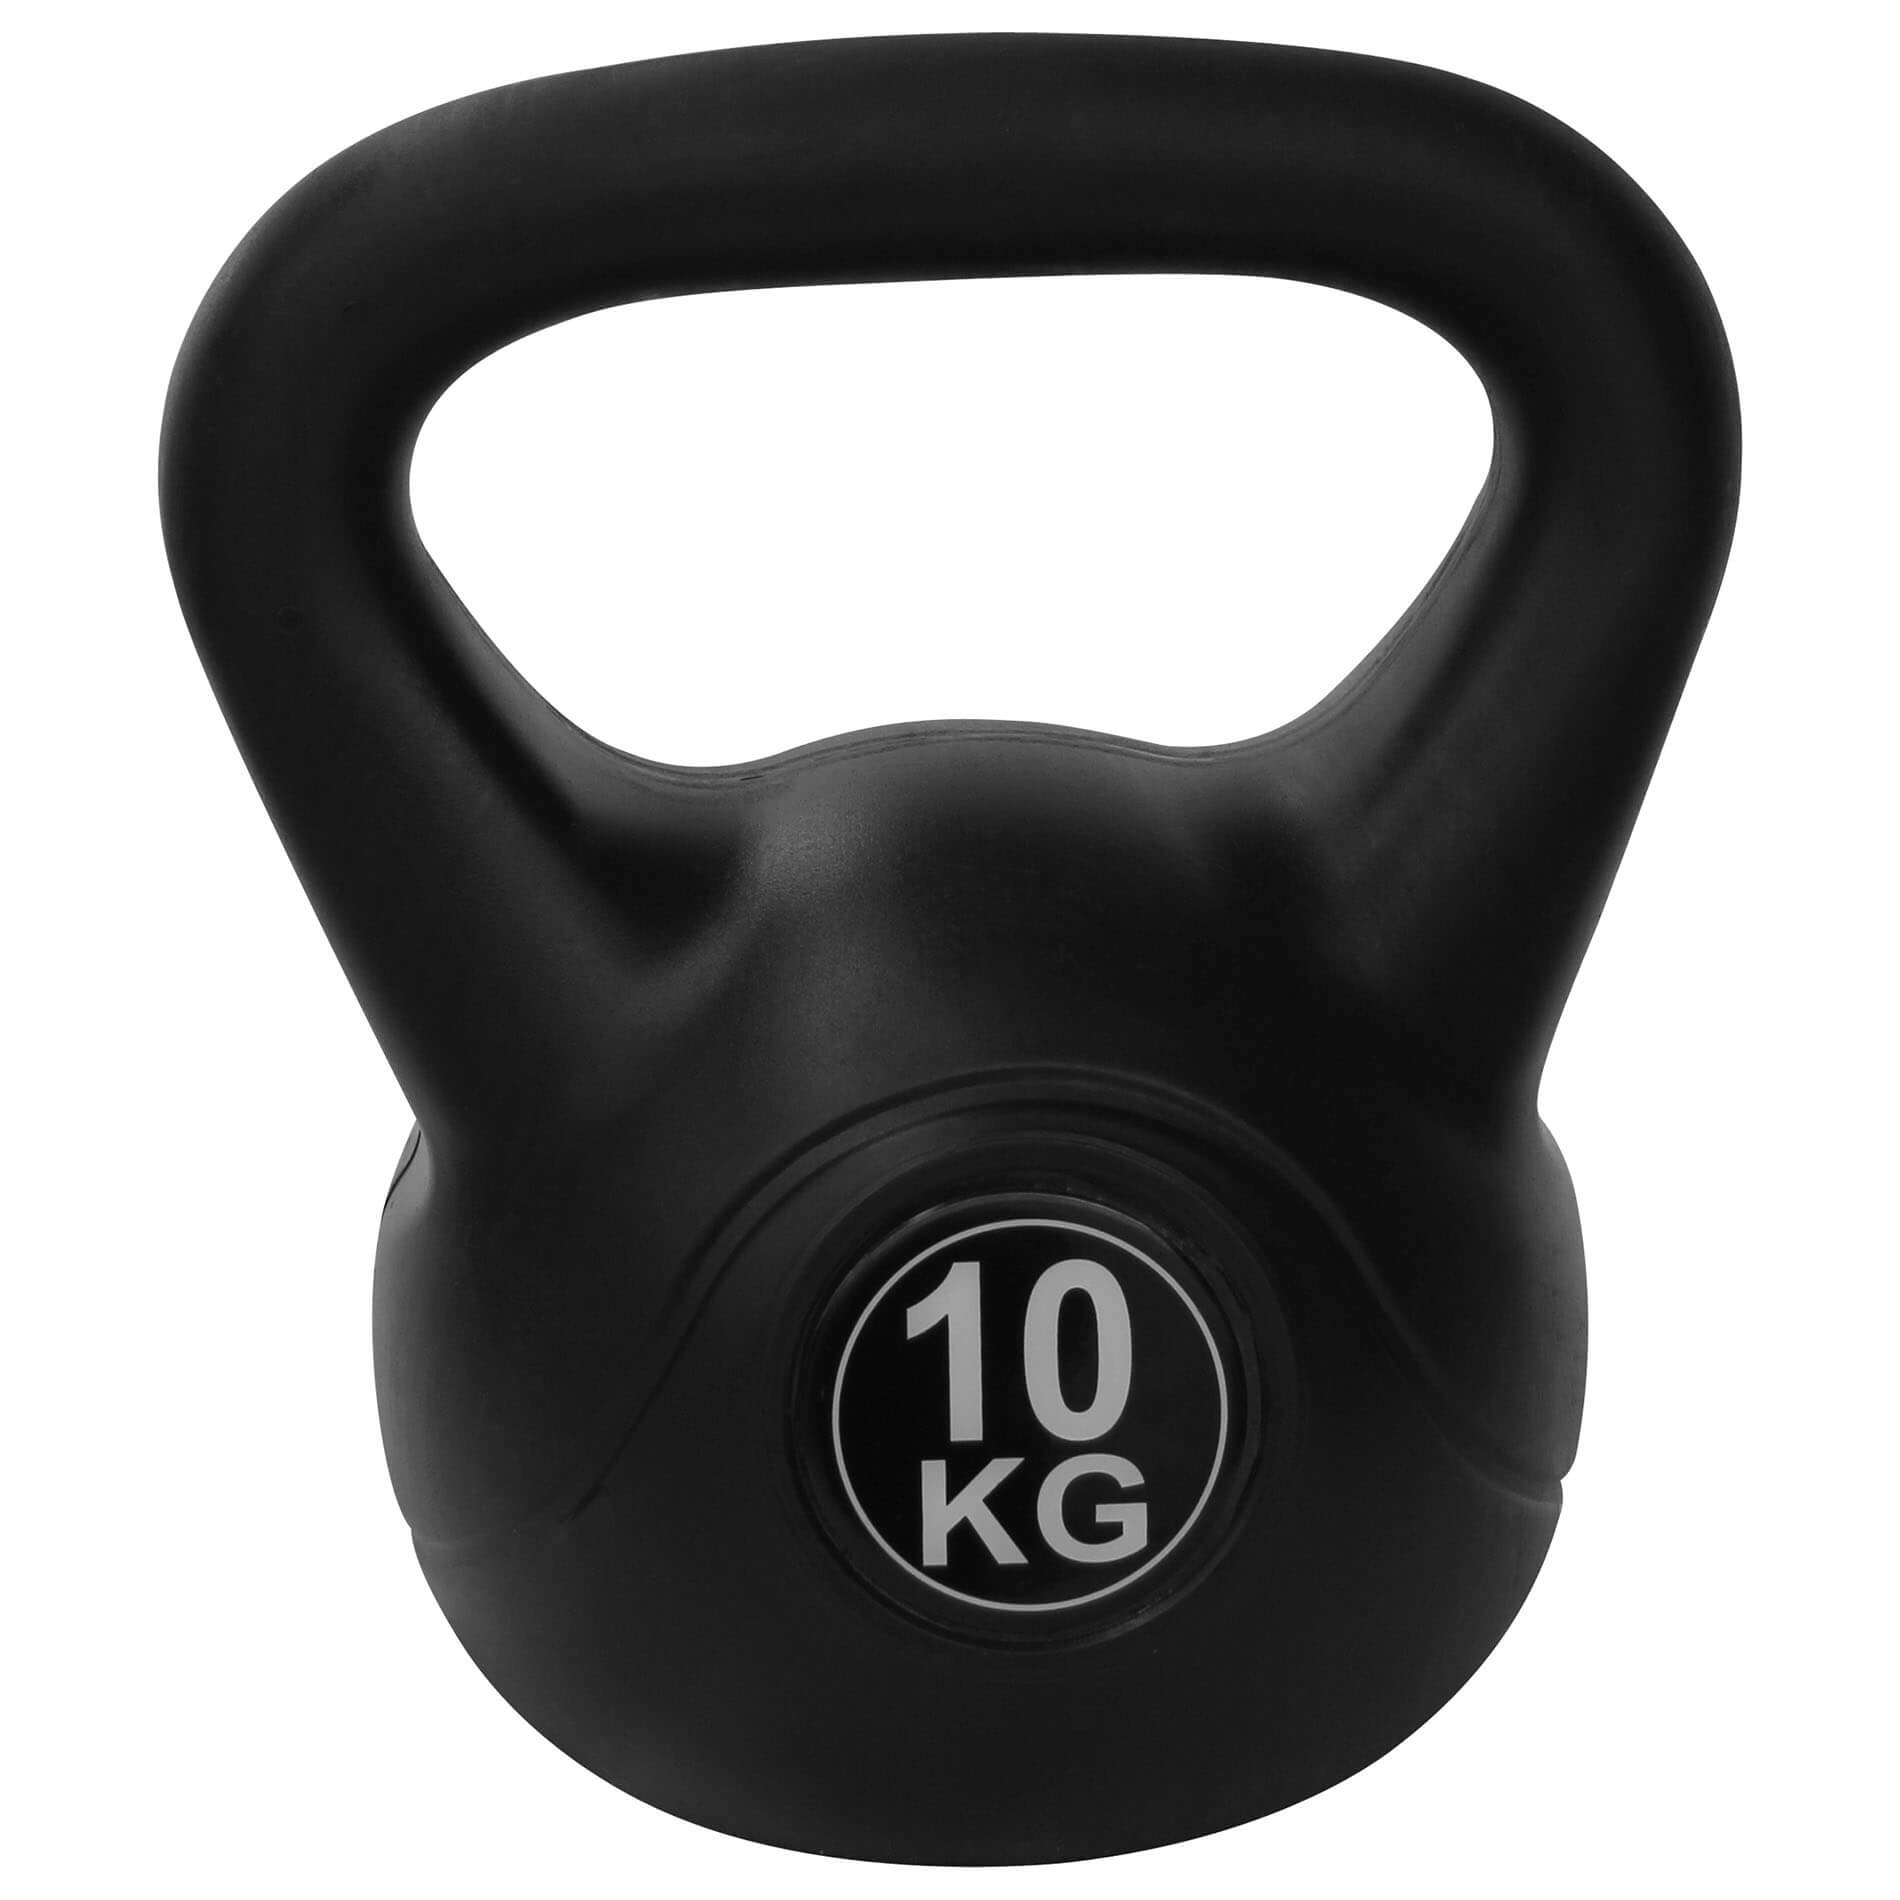 Urban Fitness Cast Iron Kettlebell 10KG